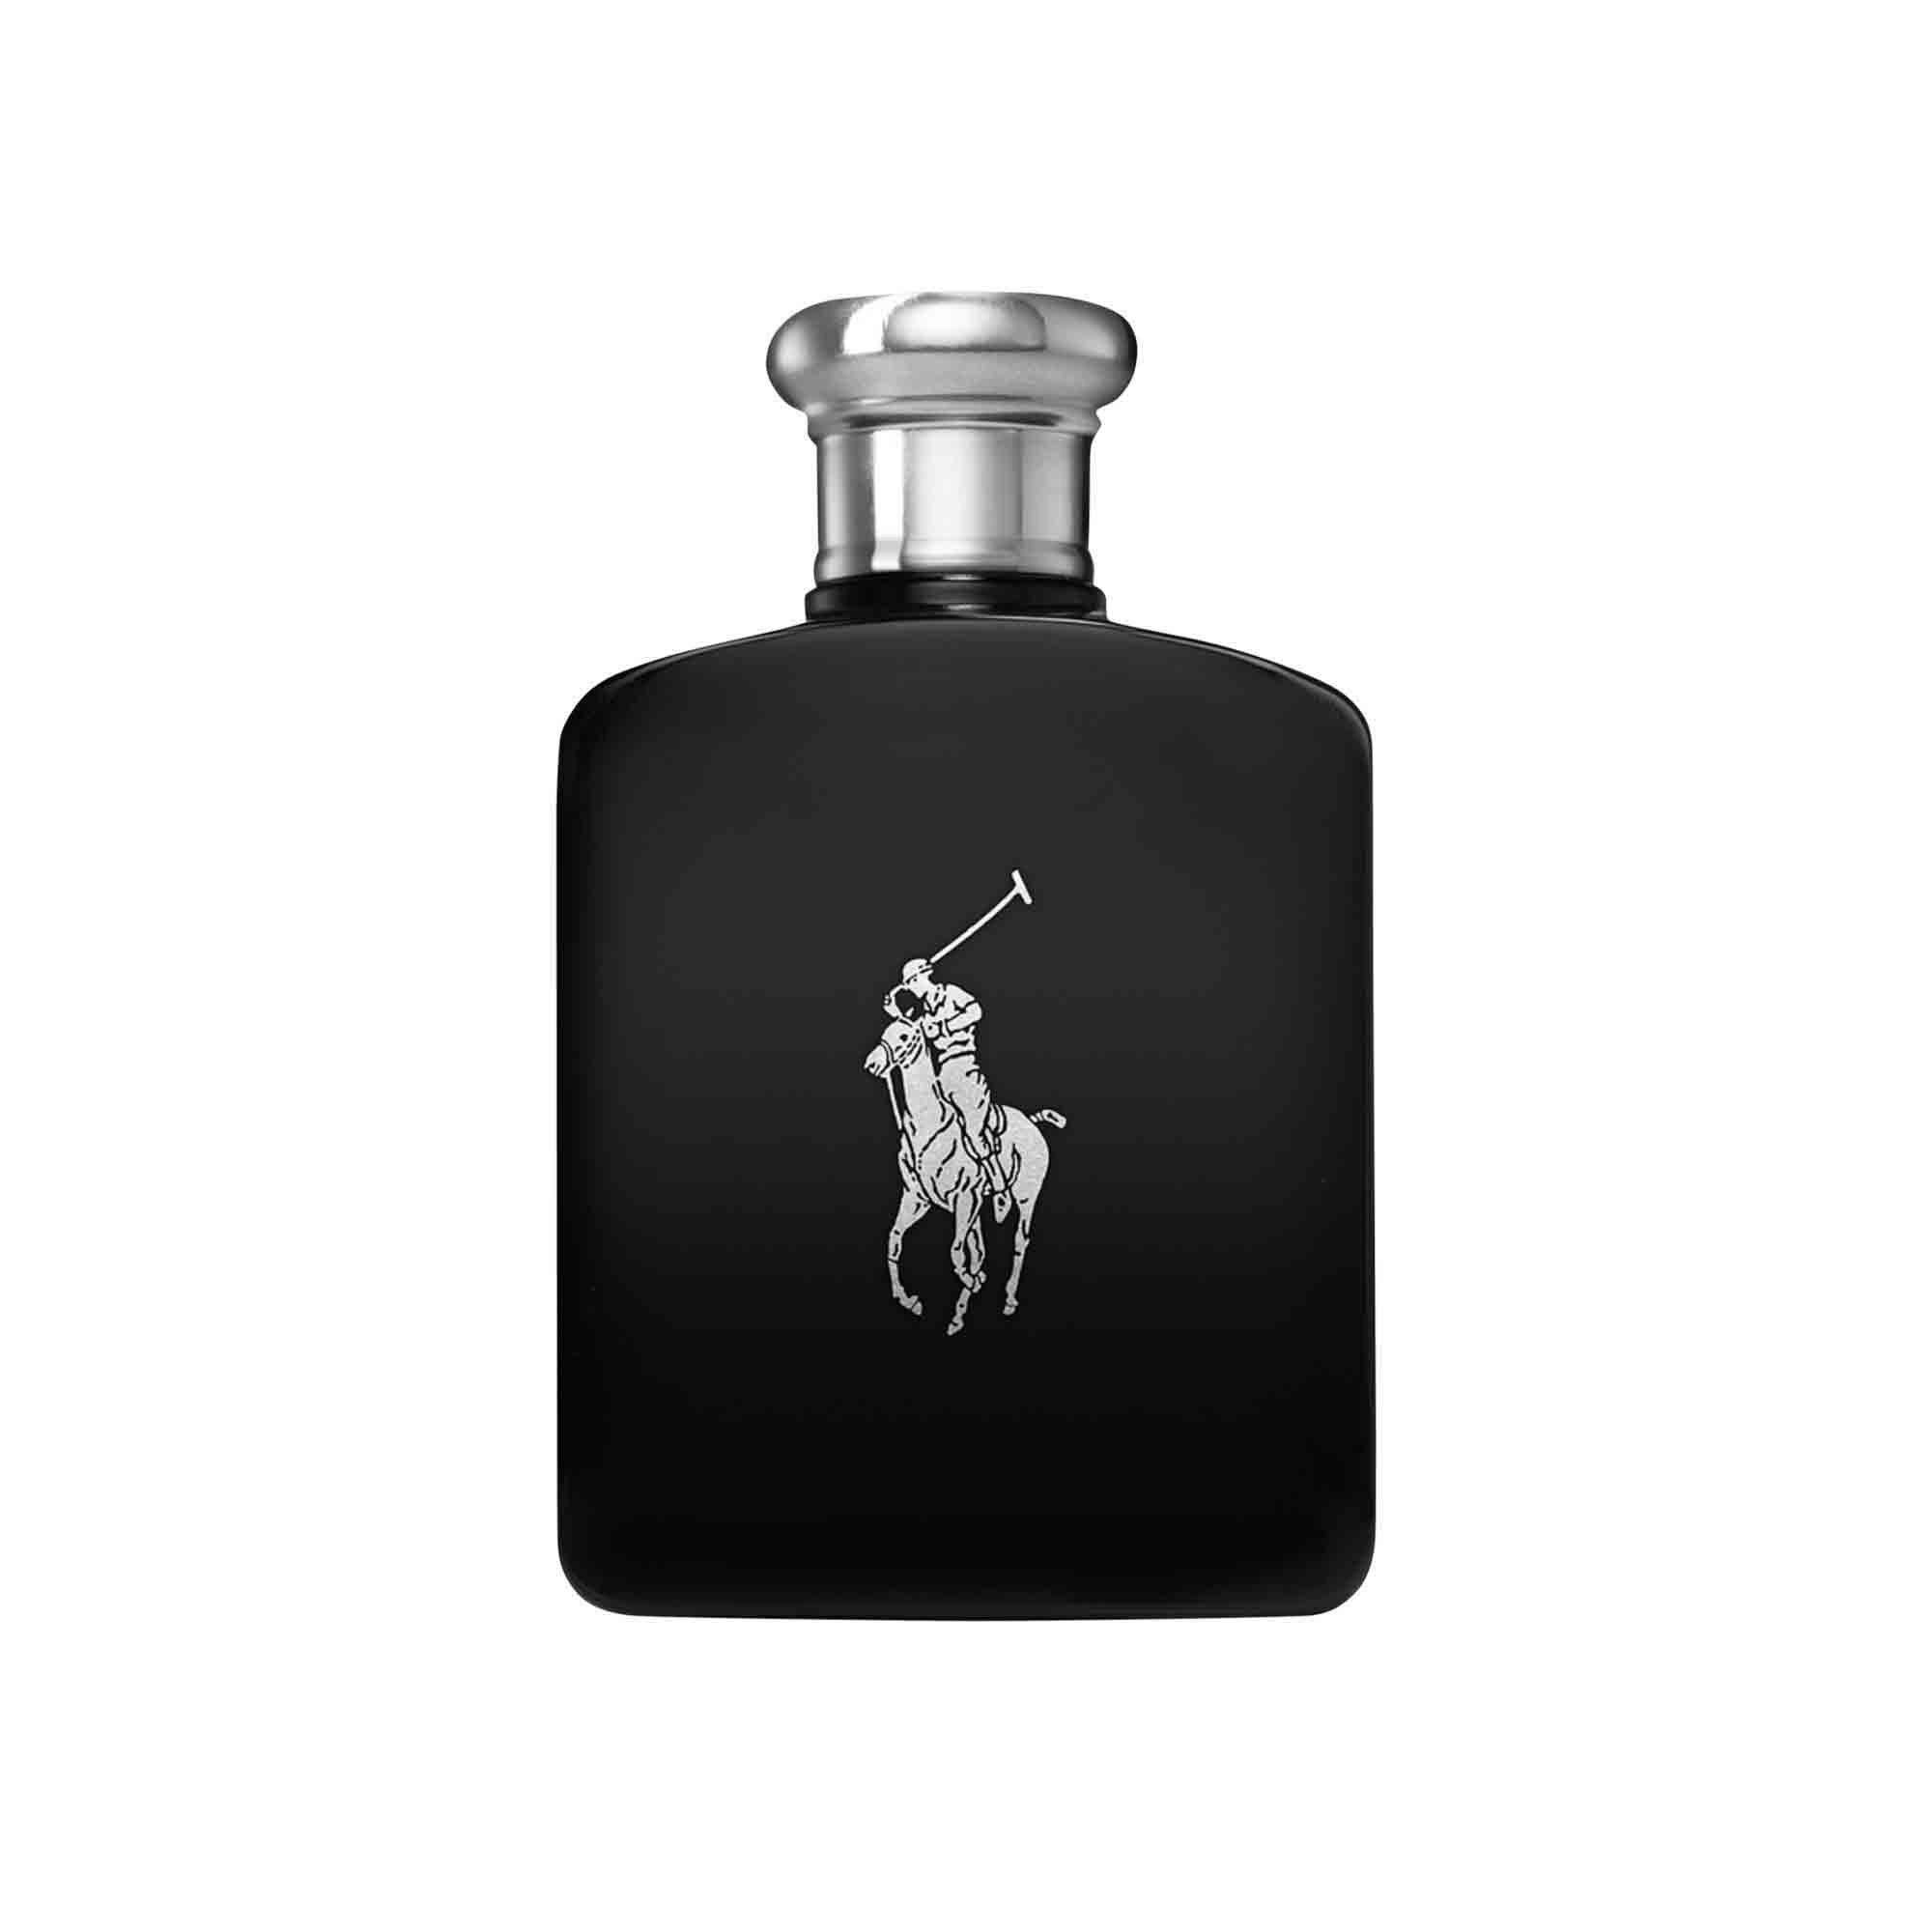 Polo Black EDT Spray Perfume for Men by Polo Ralph Lauren